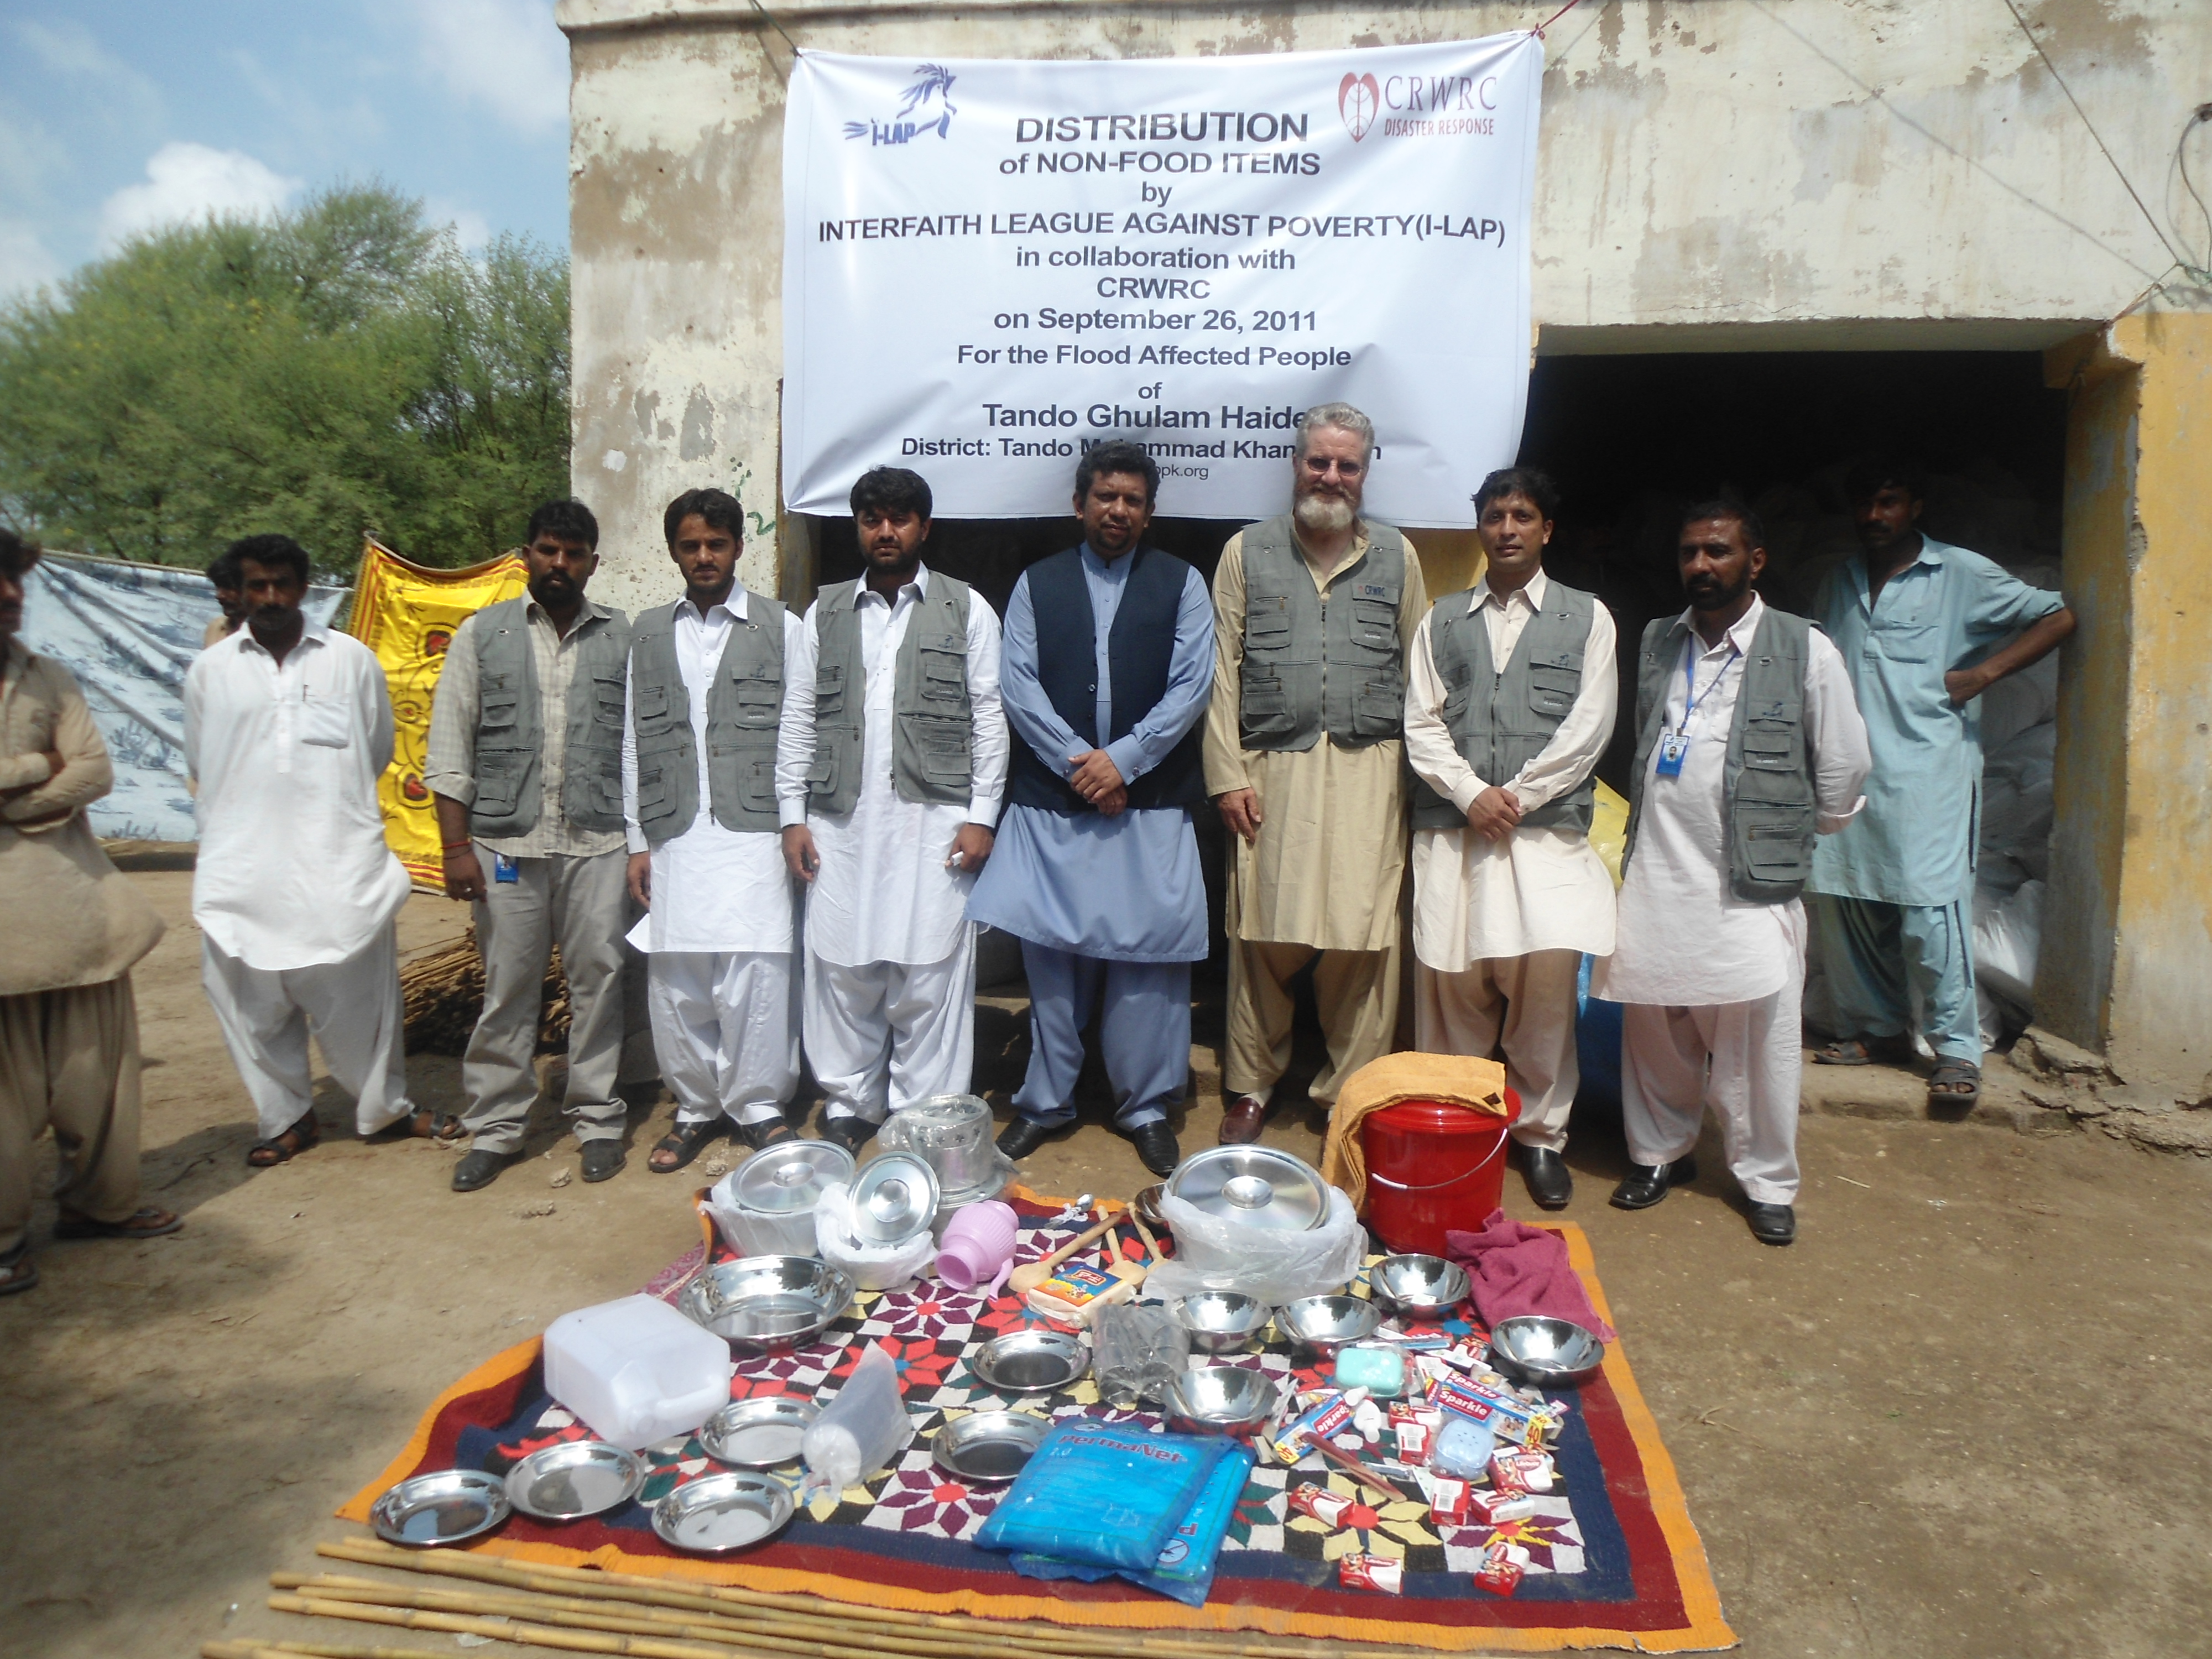 Non-Food Items Distribution Tando Muhammad Khan Sindh 2011